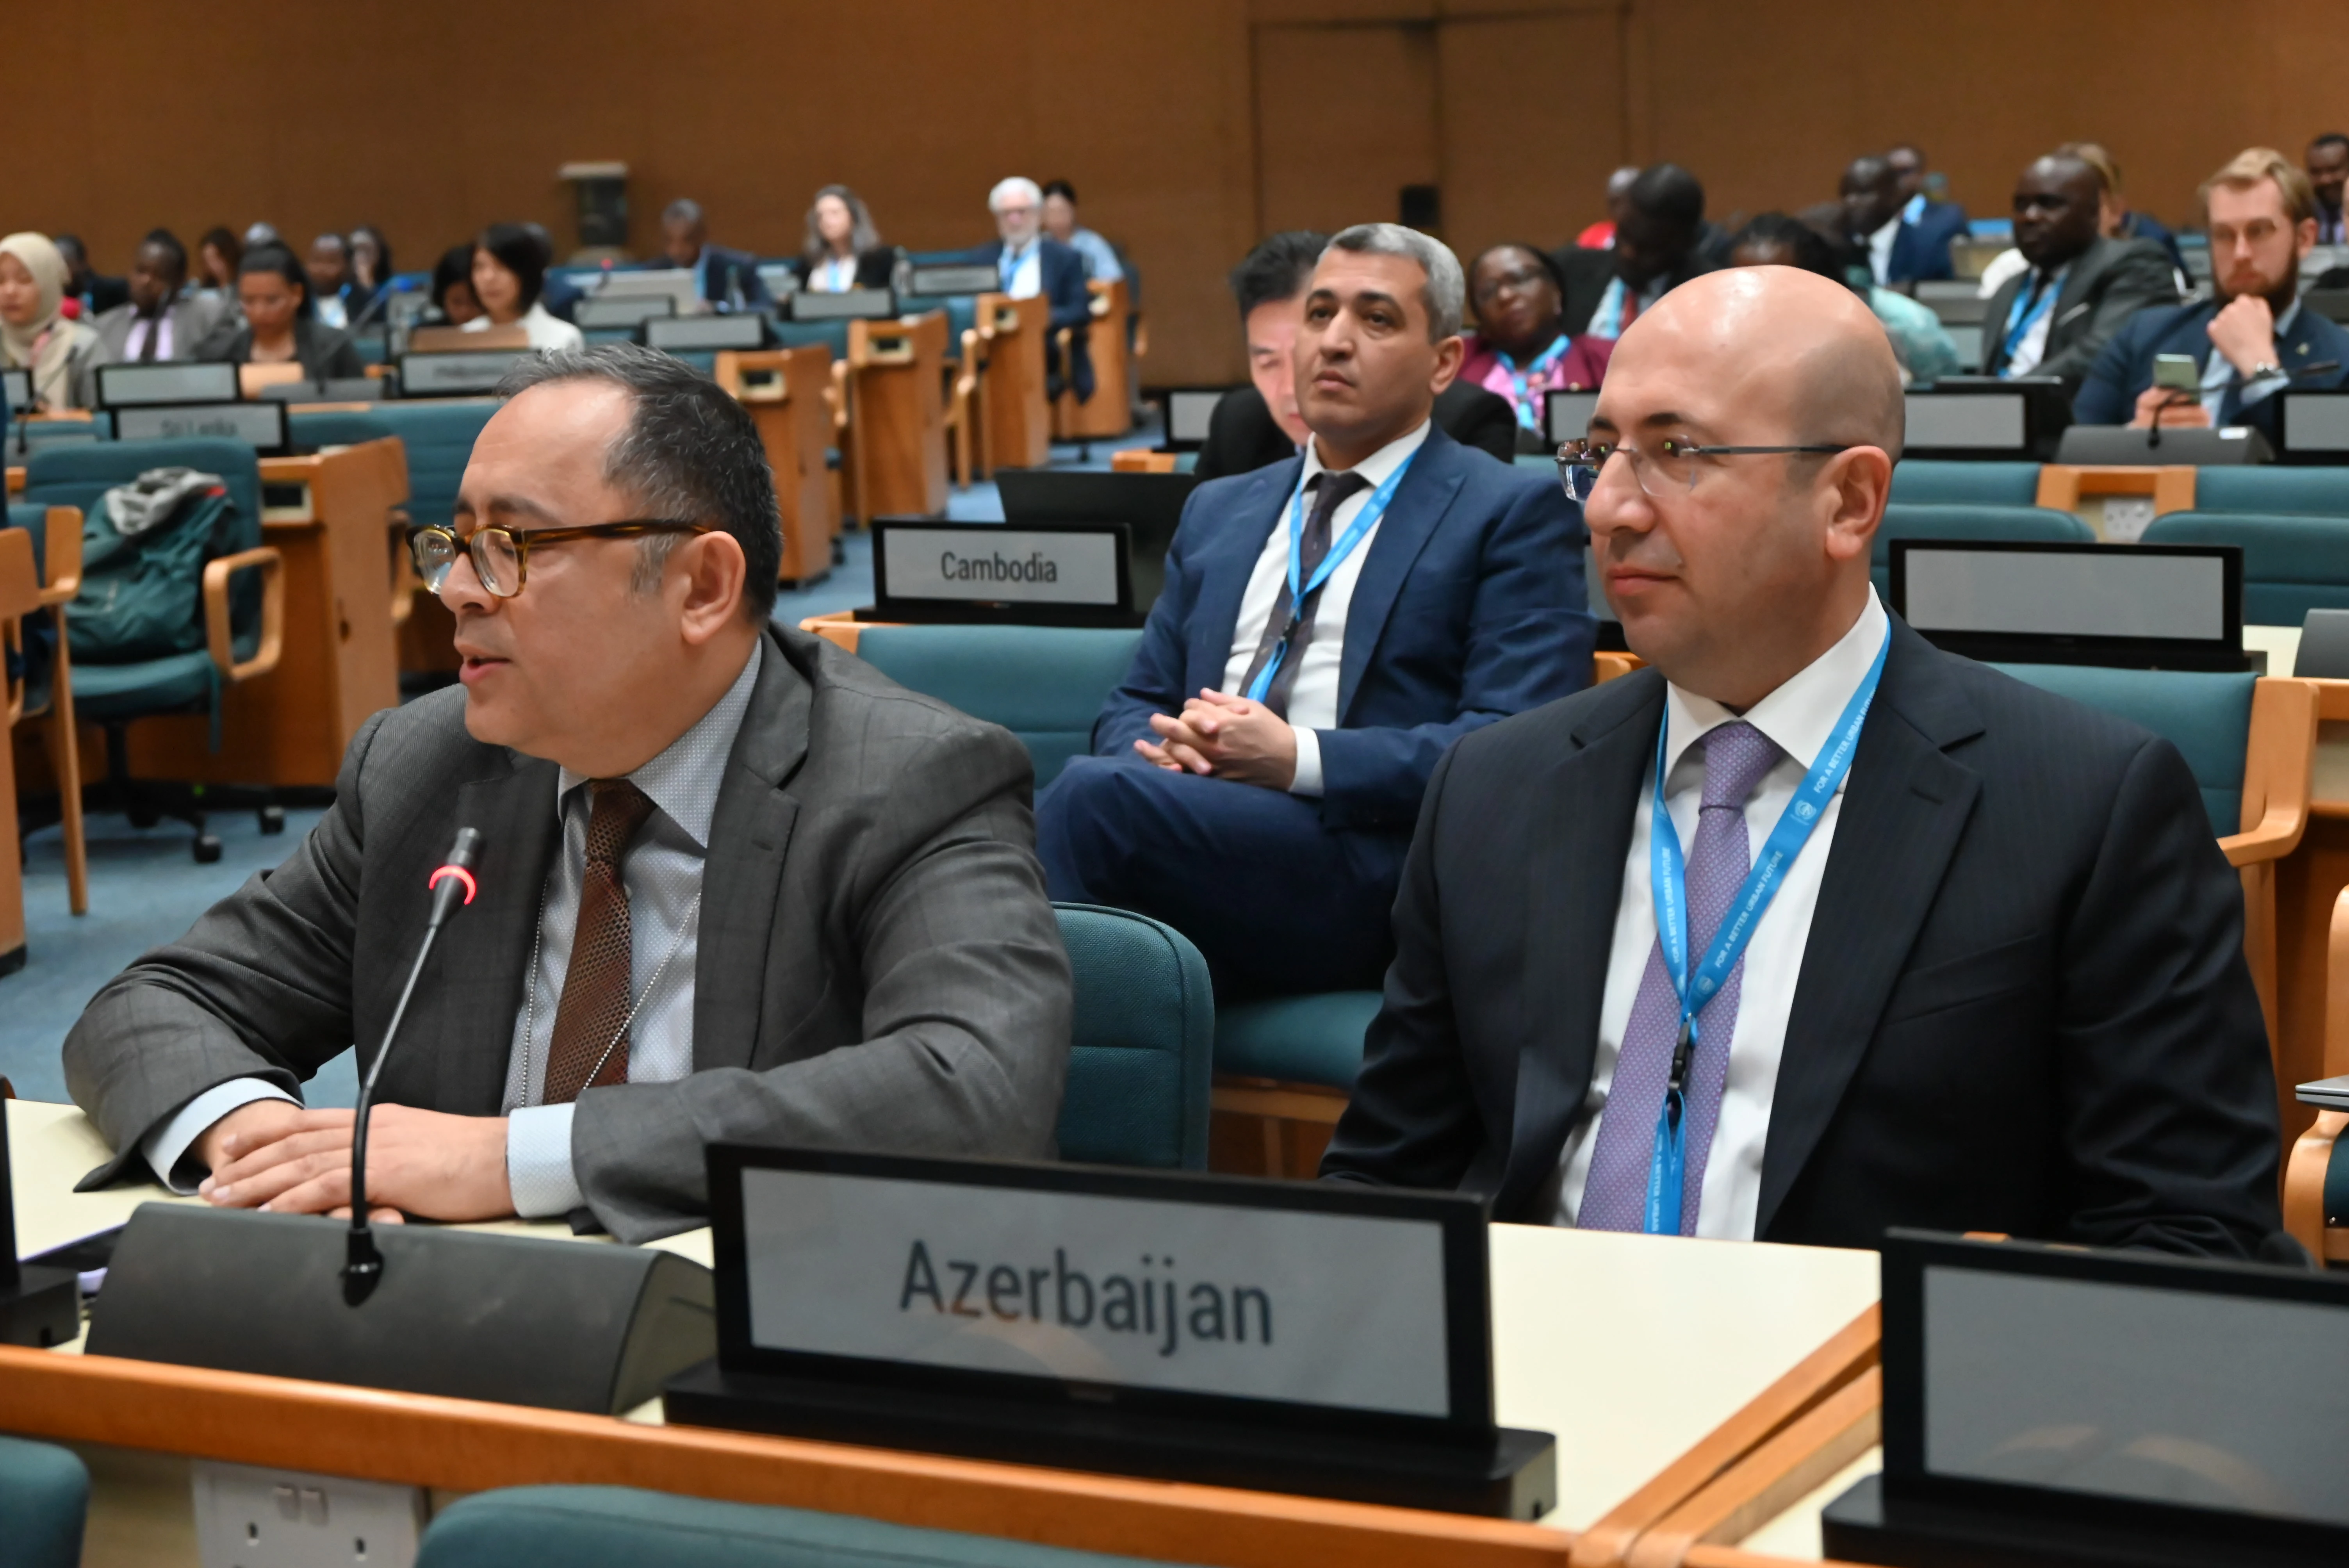 The delegation of Azerbaijan participates in the third session of the UN-Habitat’s Executive Board.